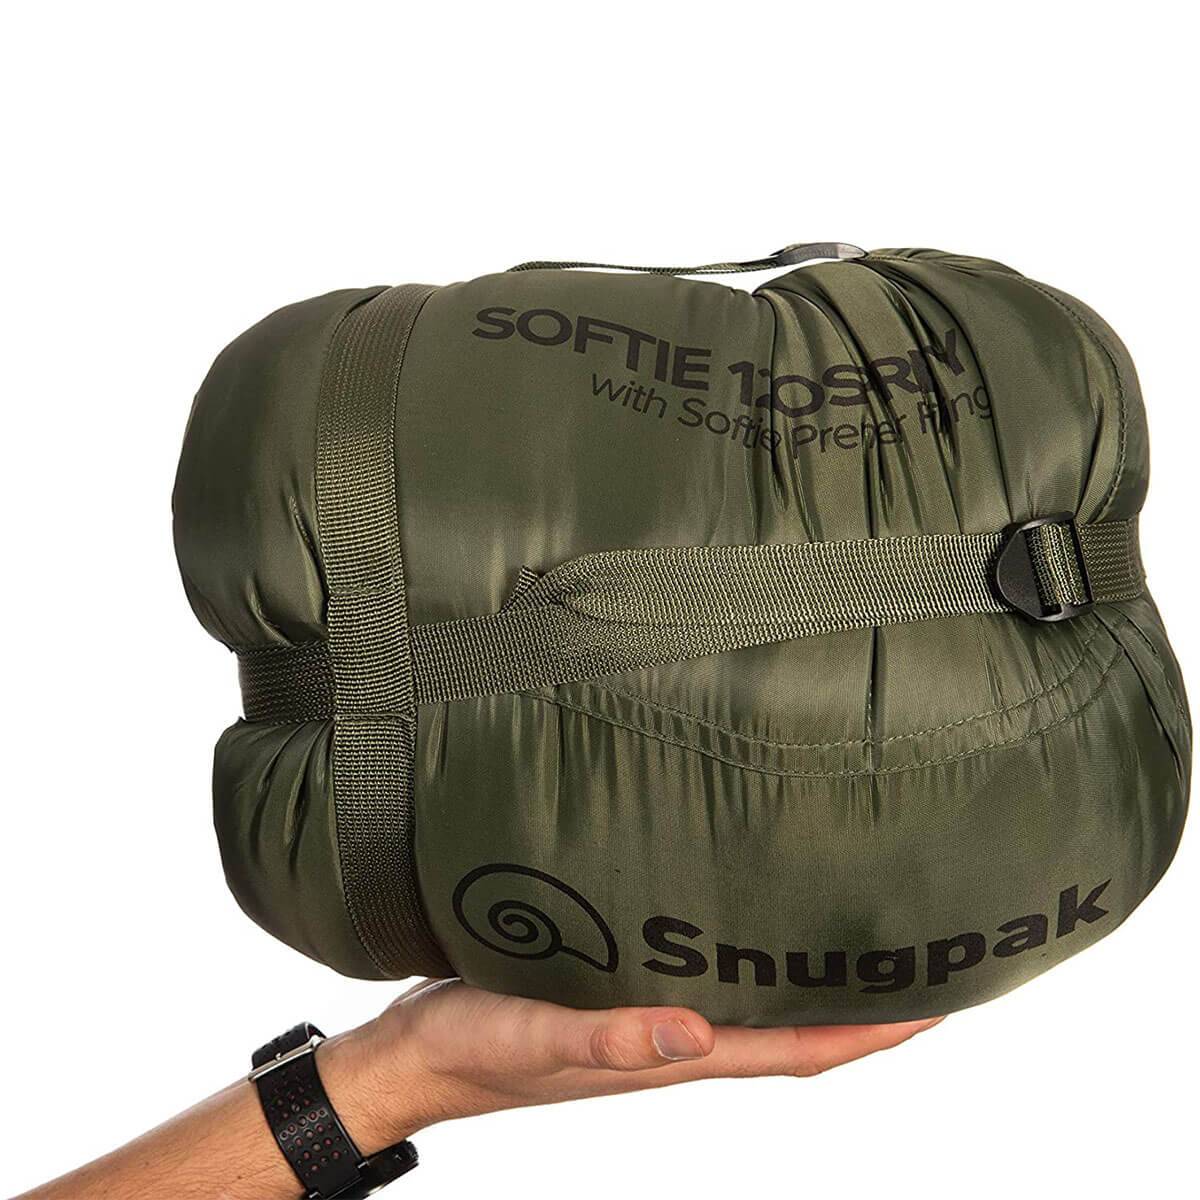 Snugpak Softie 12 Osprey Sleeping Bag - John Bull Clothing